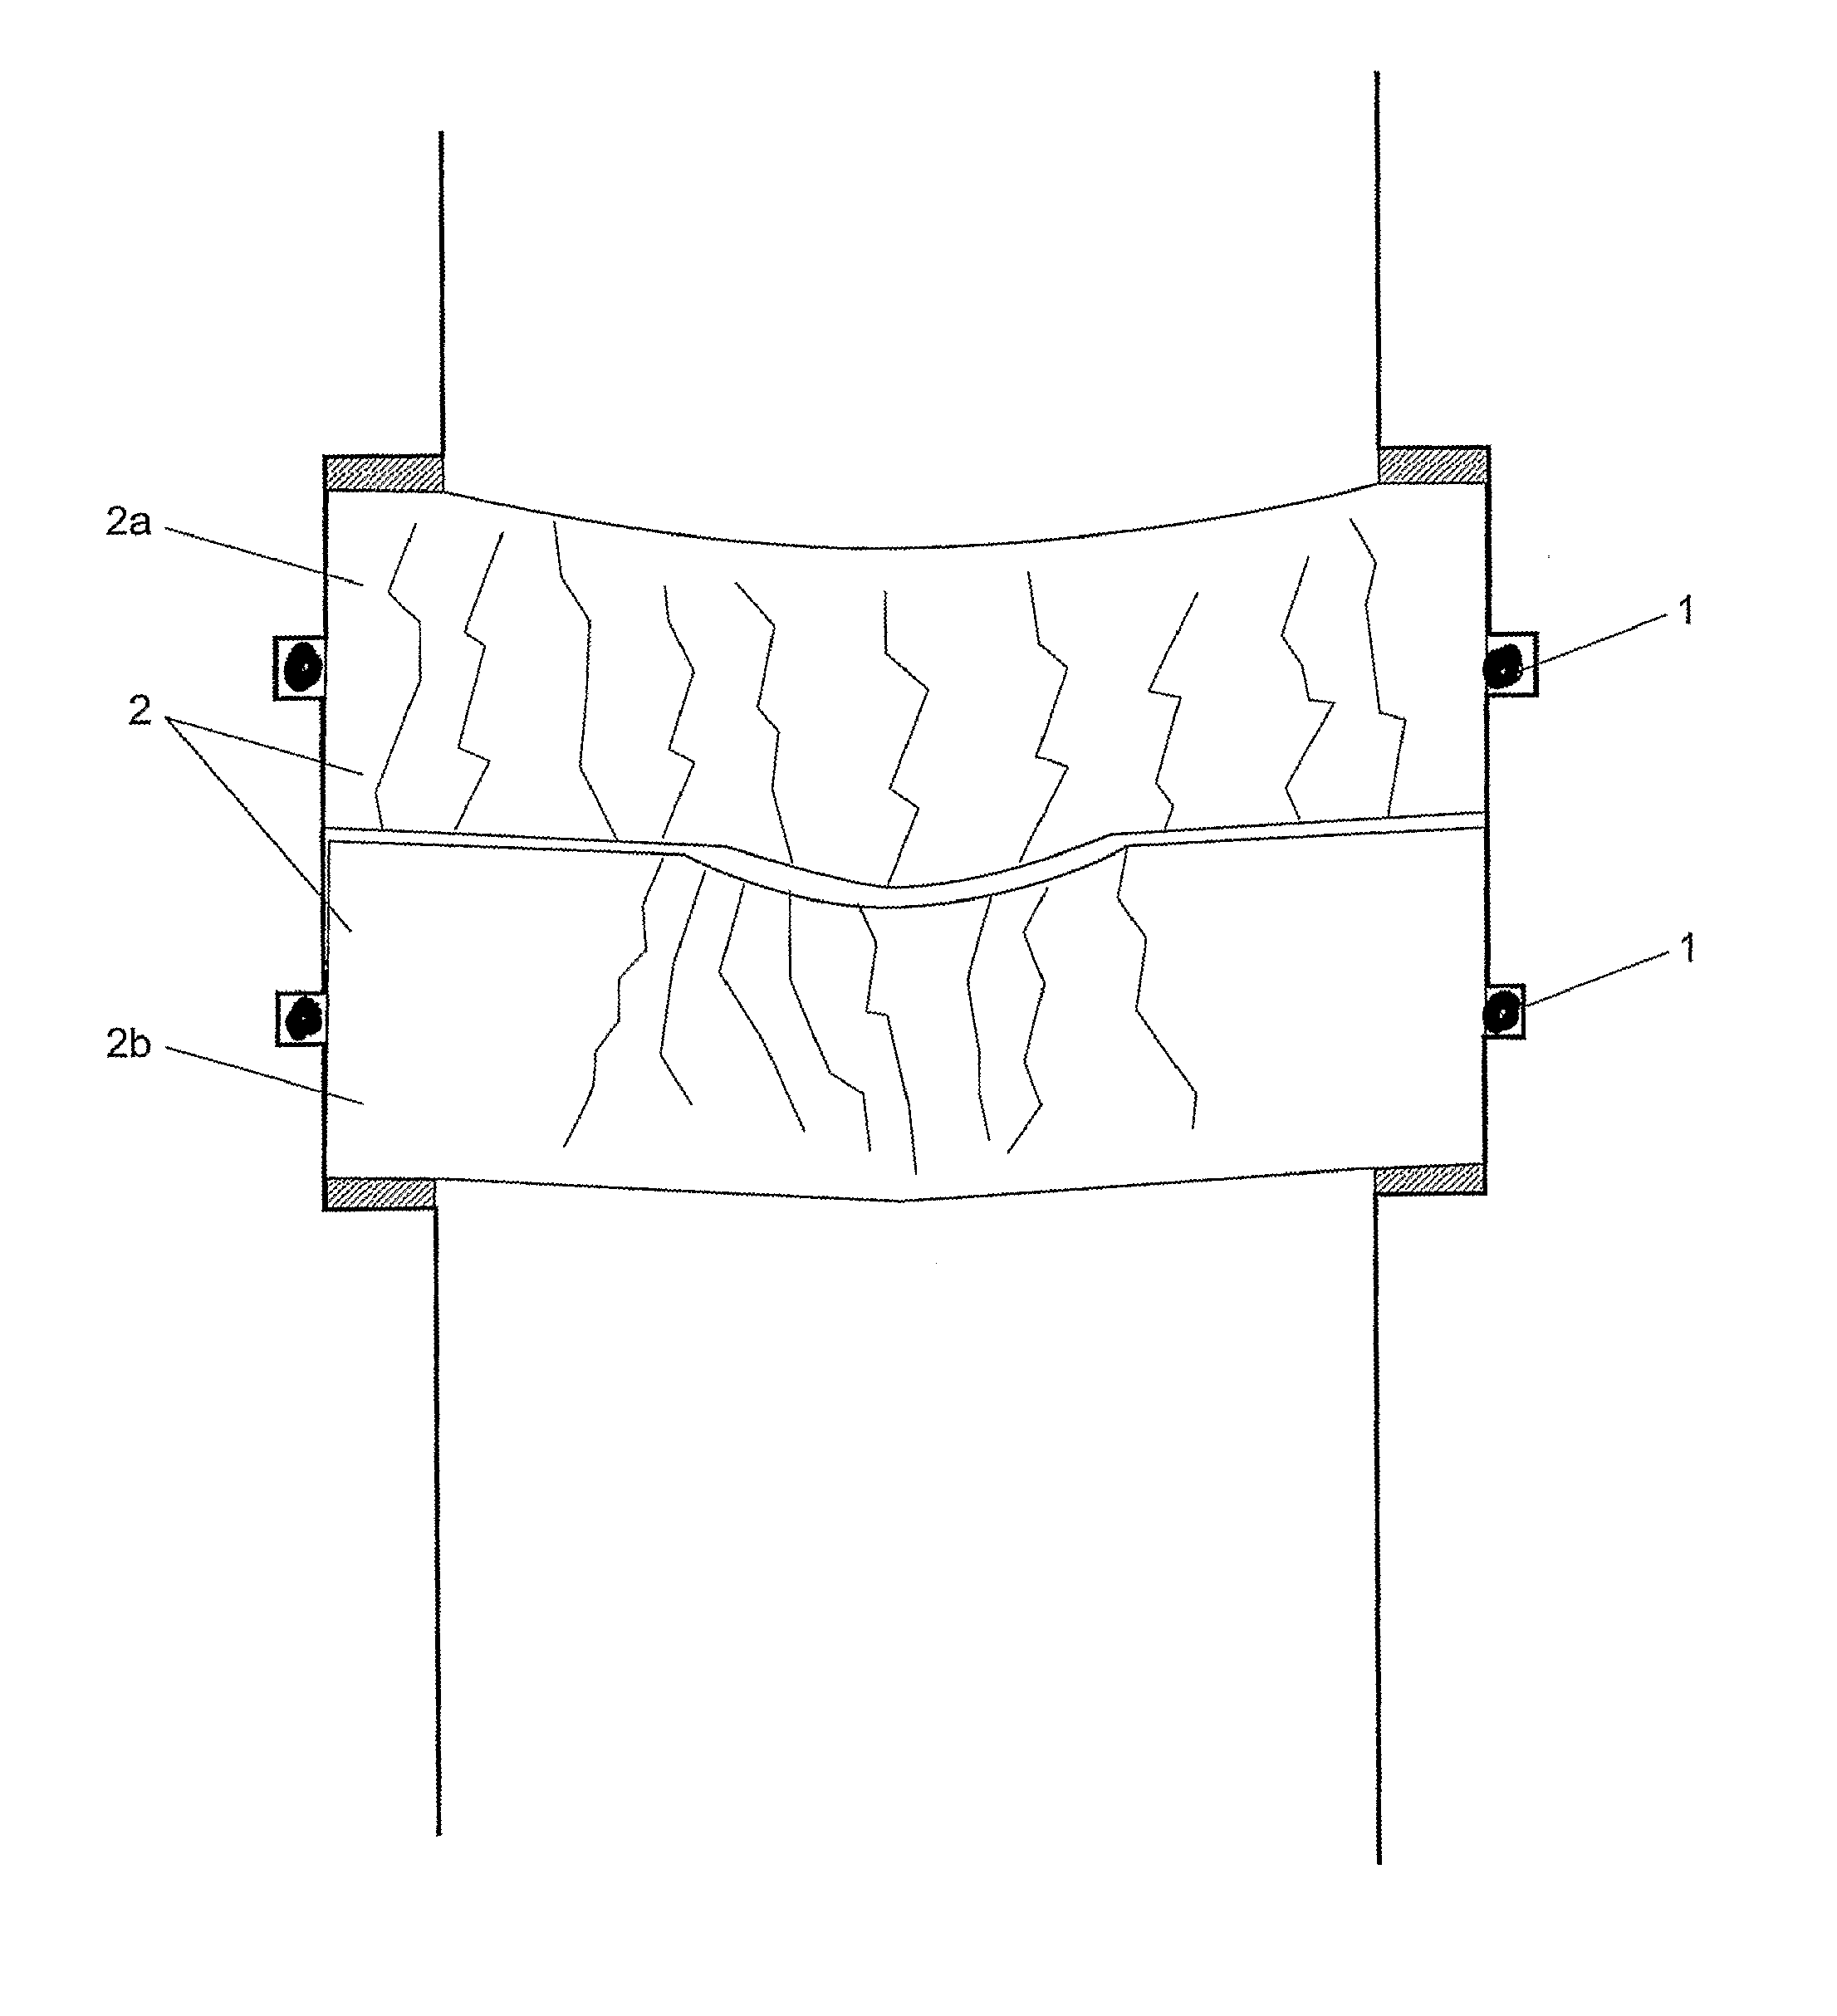 Plug construction comprising a hydraulic crushing body